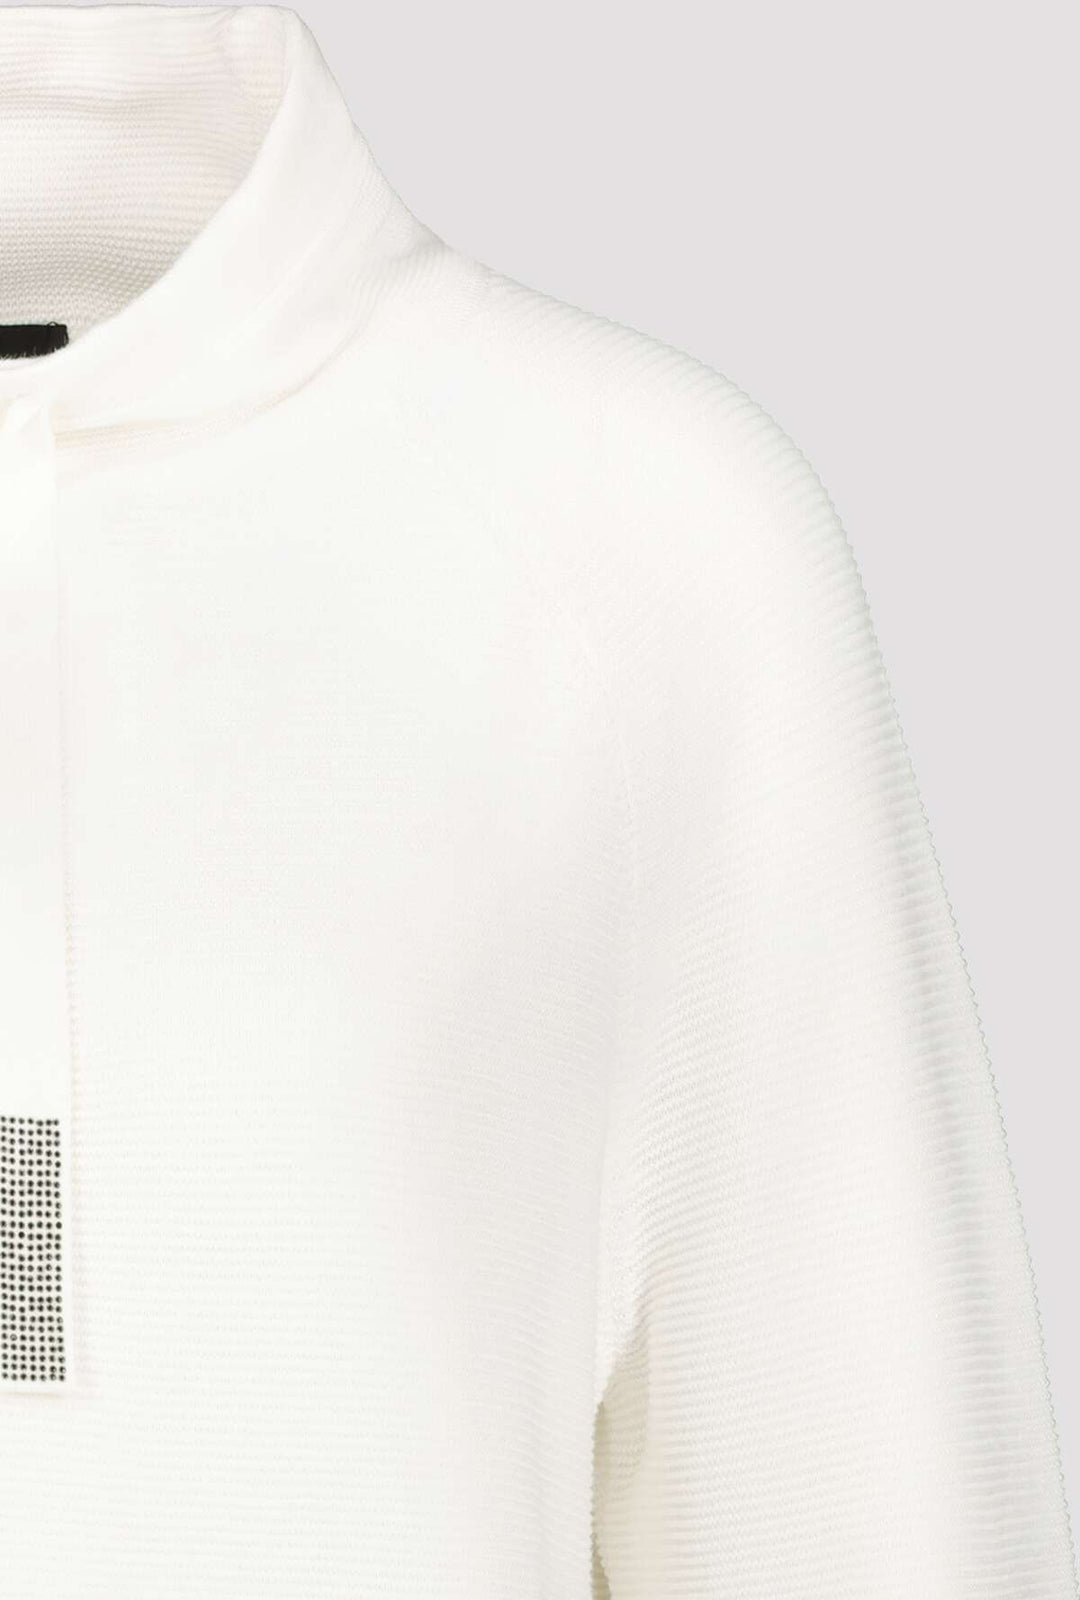 Monari One Tone Off-White Jumper 100% Cotton with Rhinestones Detail | Dotique